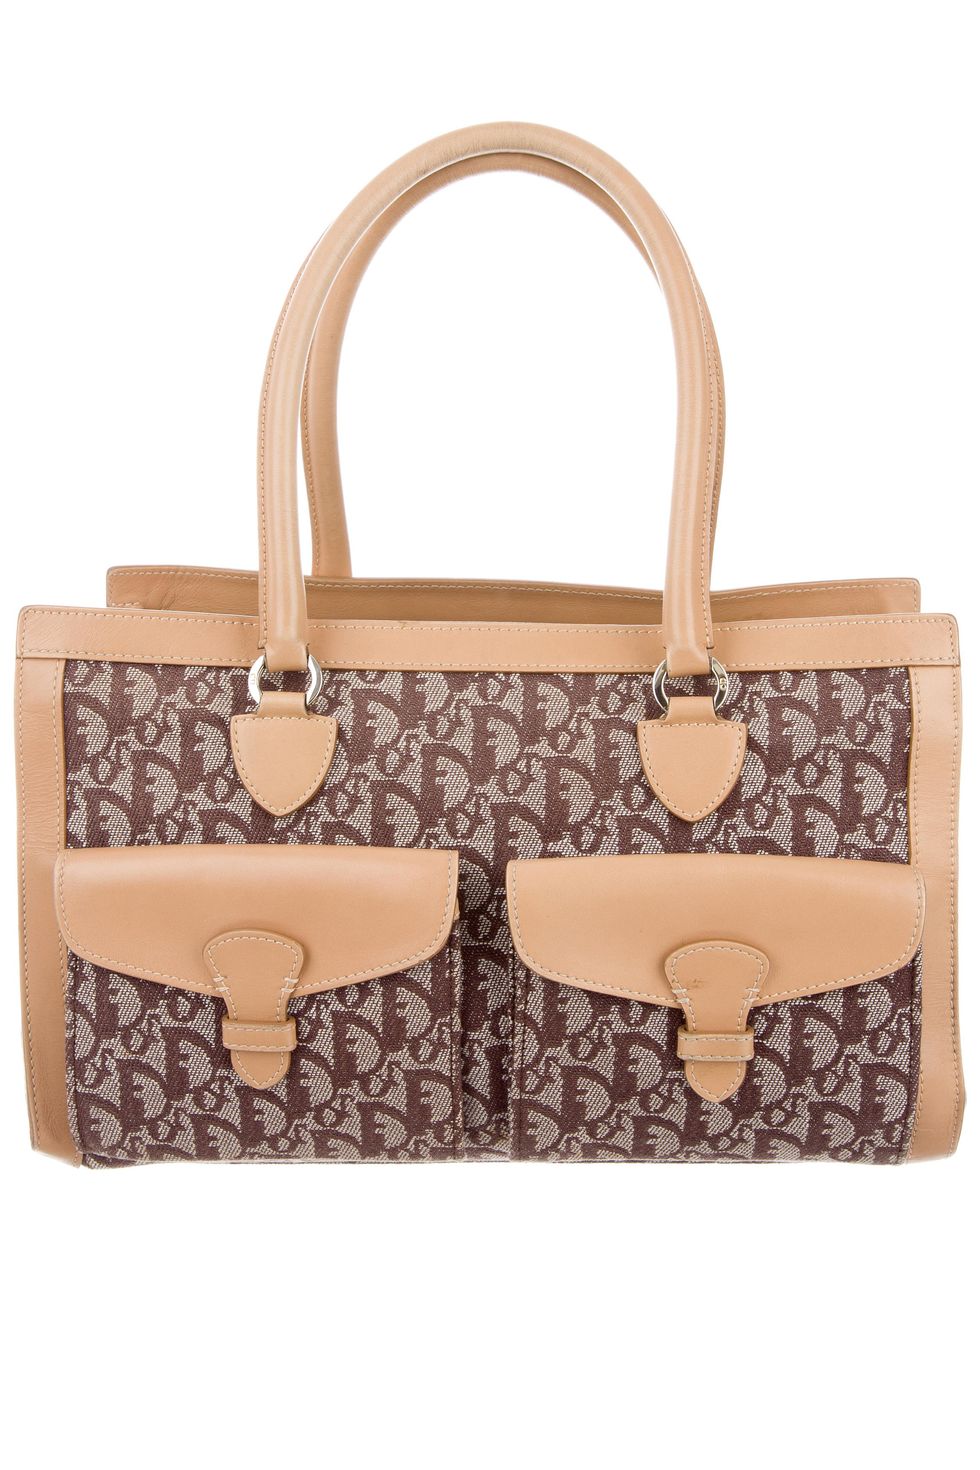 Handbag, Bag, Fashion accessory, Shoulder bag, Beige, Brown, Material property, Tote bag, Fawn, Leather, 